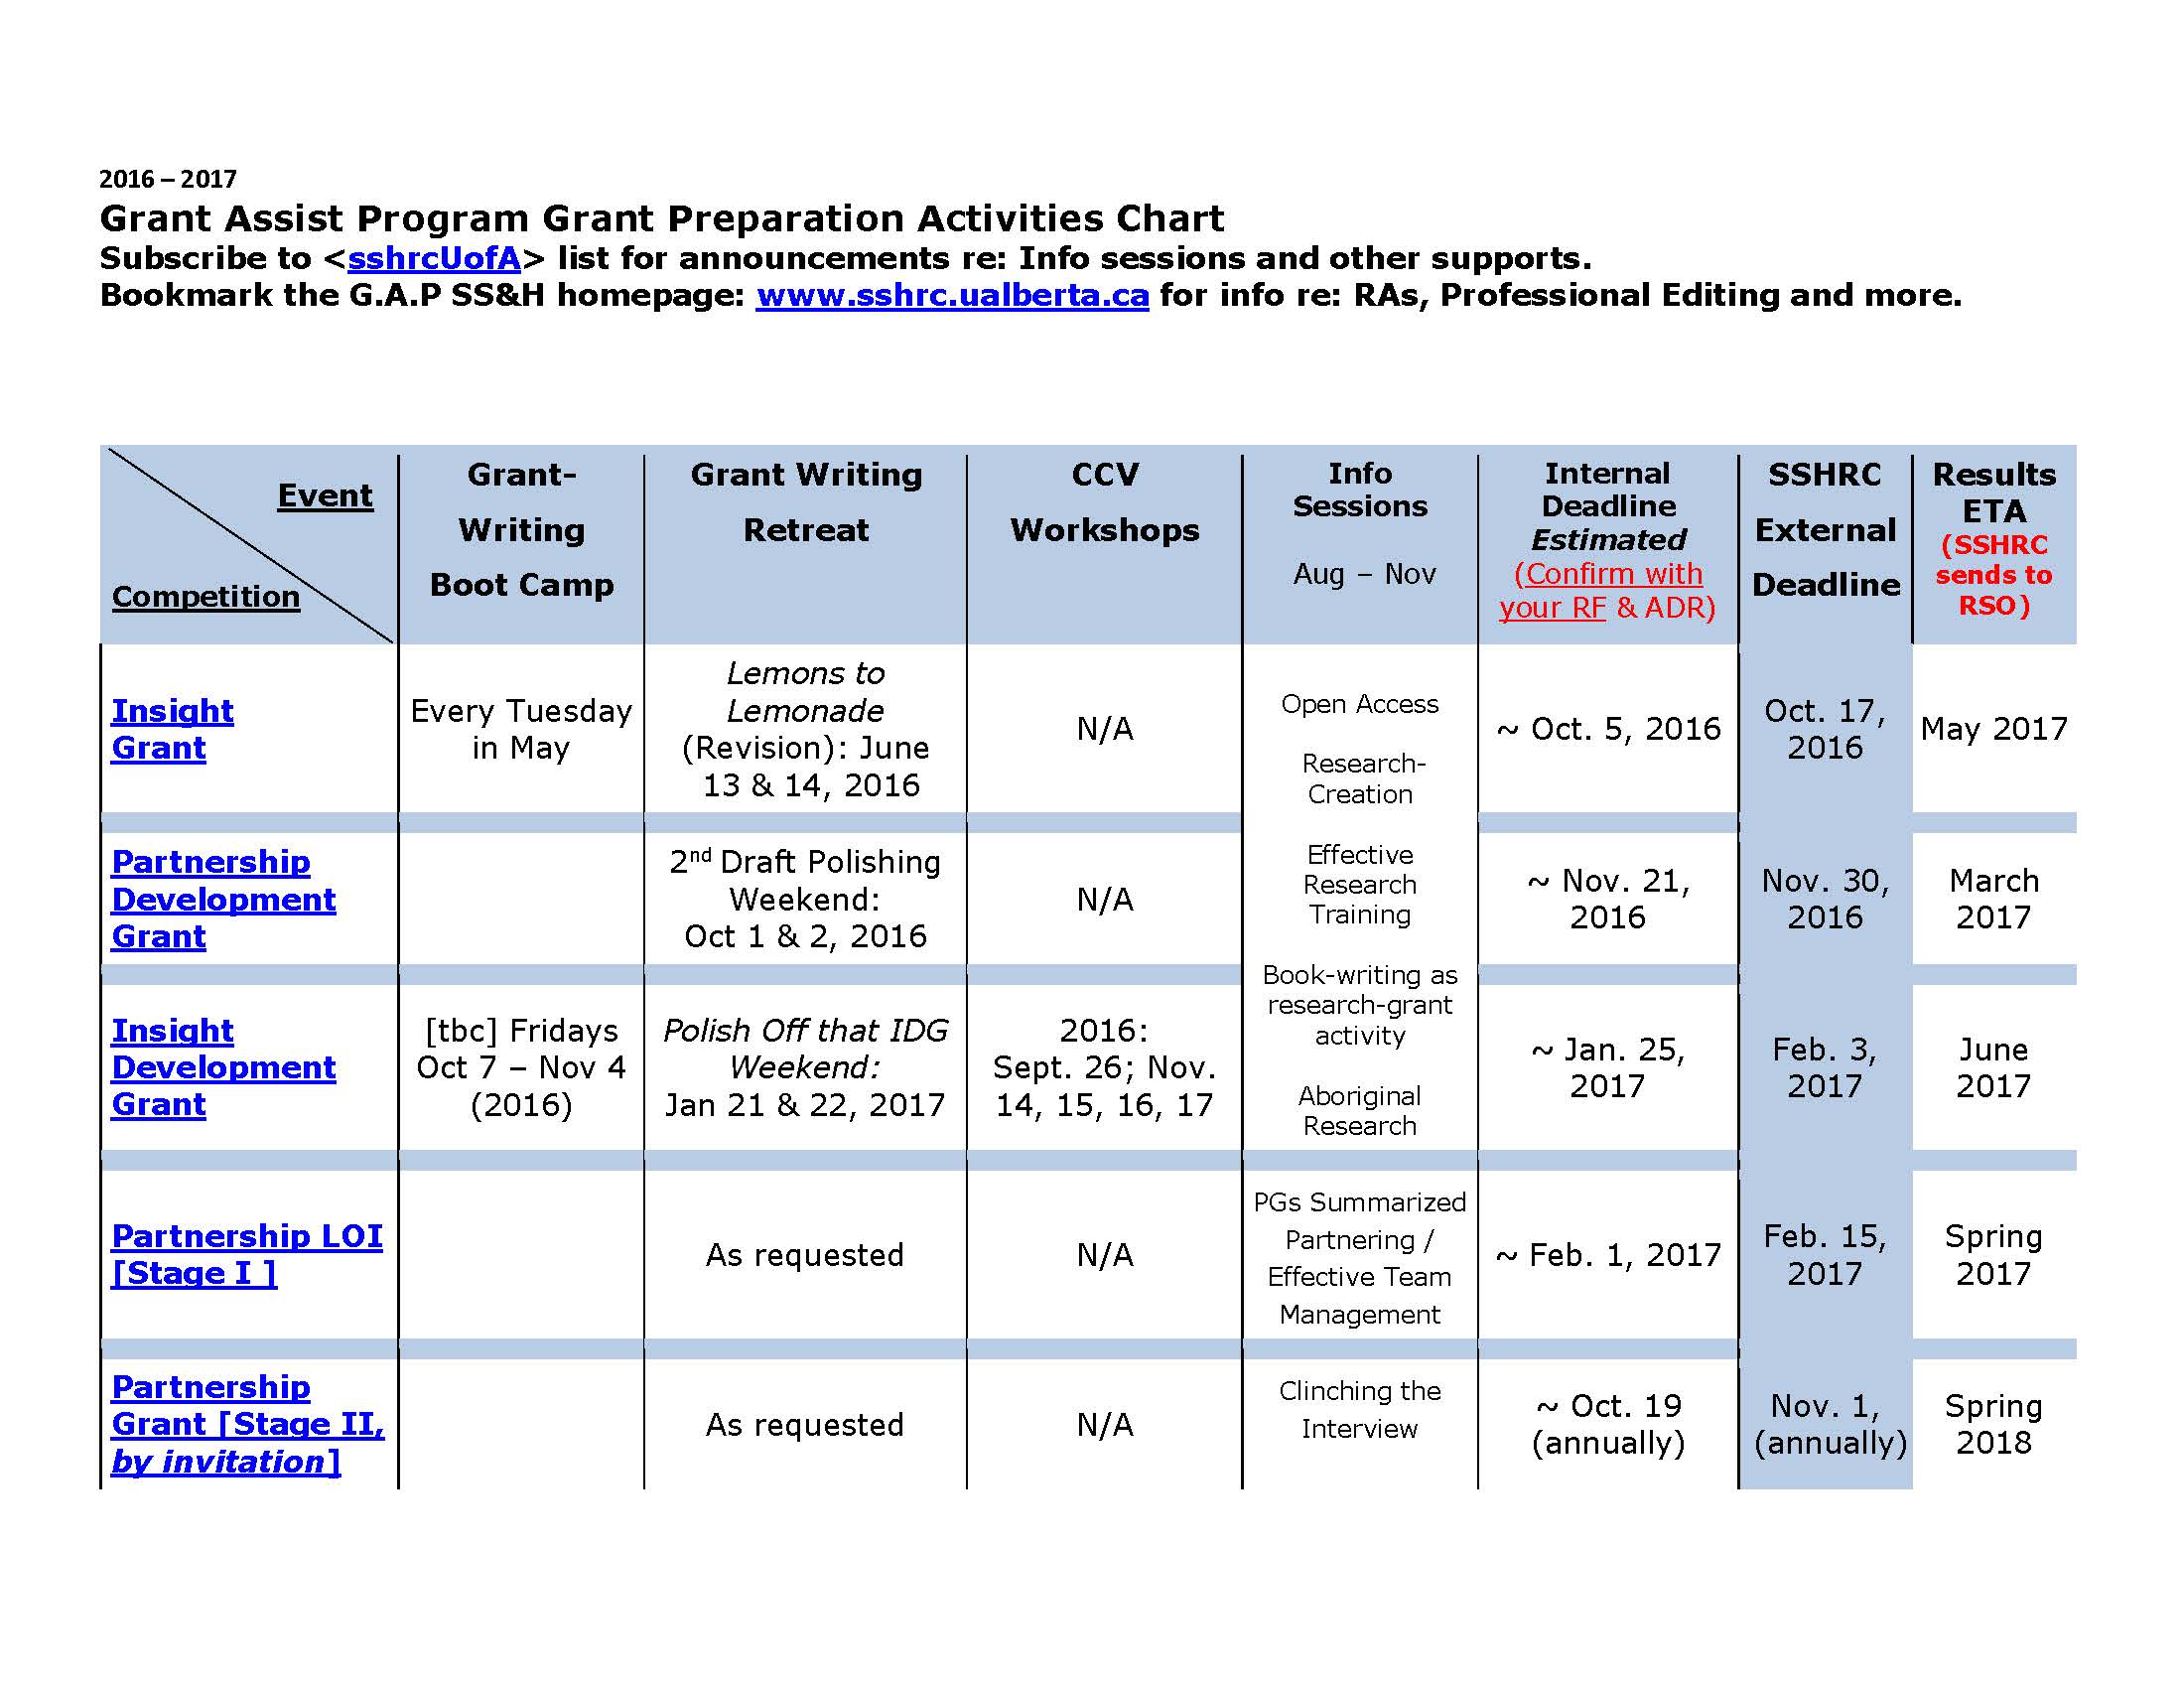 Grant Preparation Activities Chart